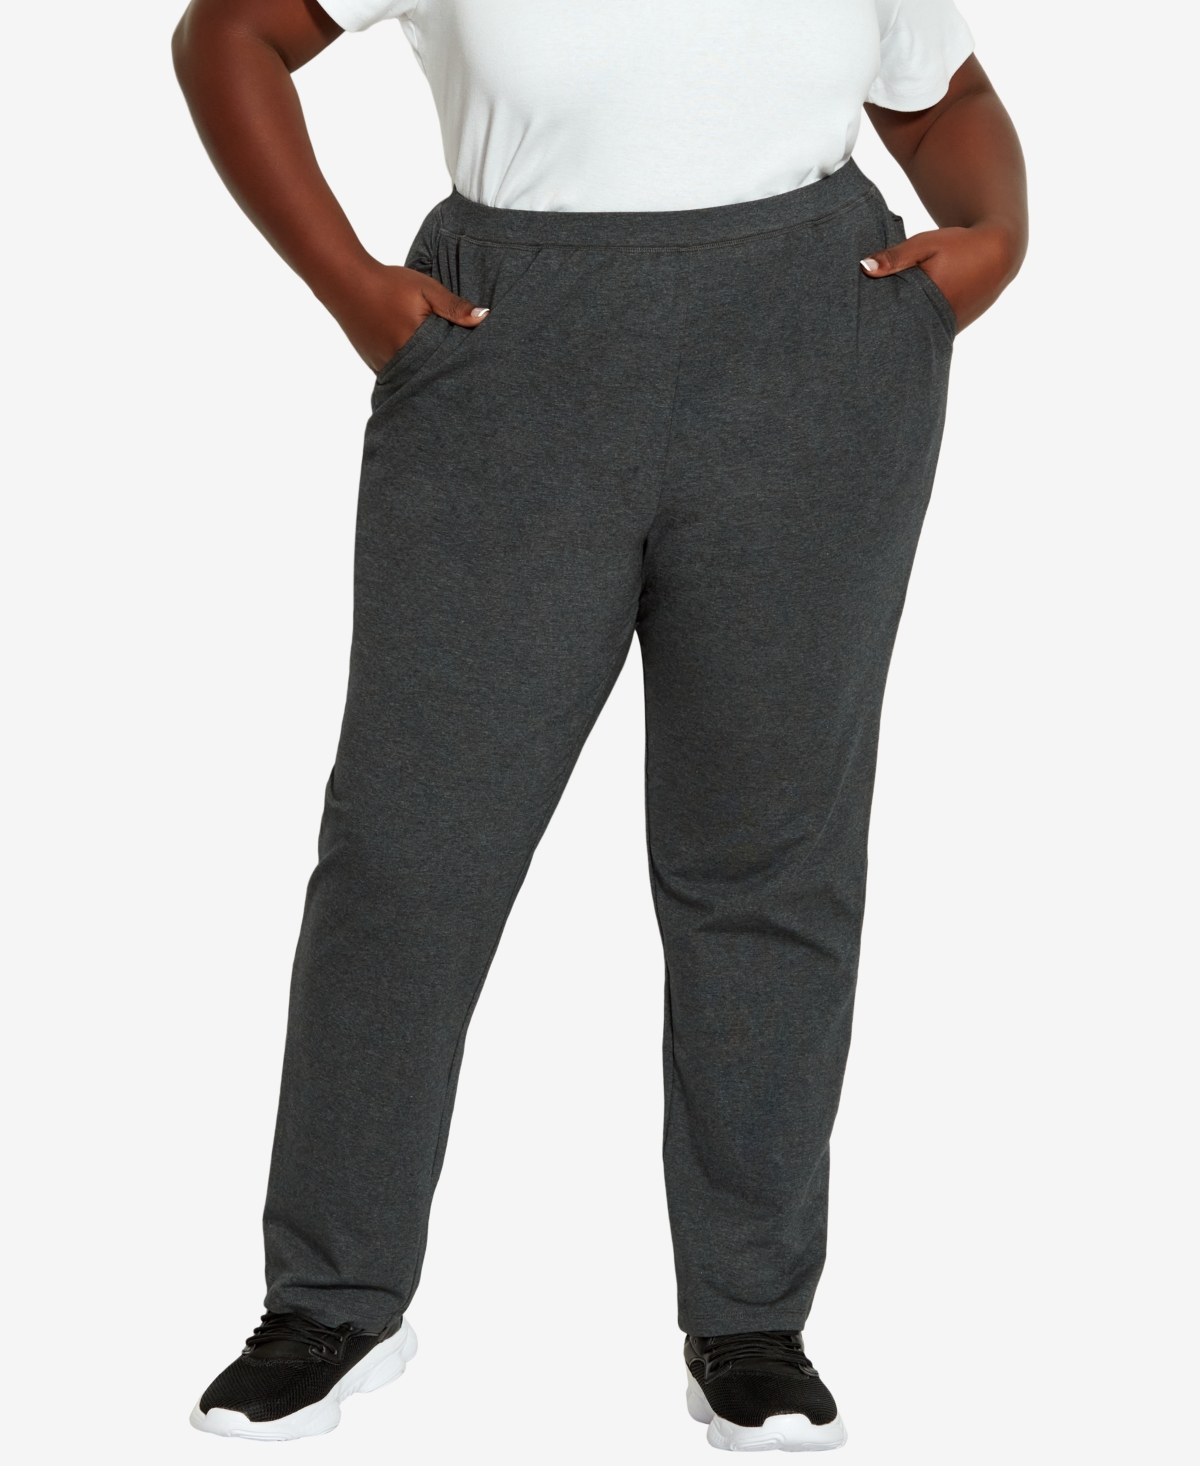  Avenue Plus Size Active Regular Length Pants With Pockets